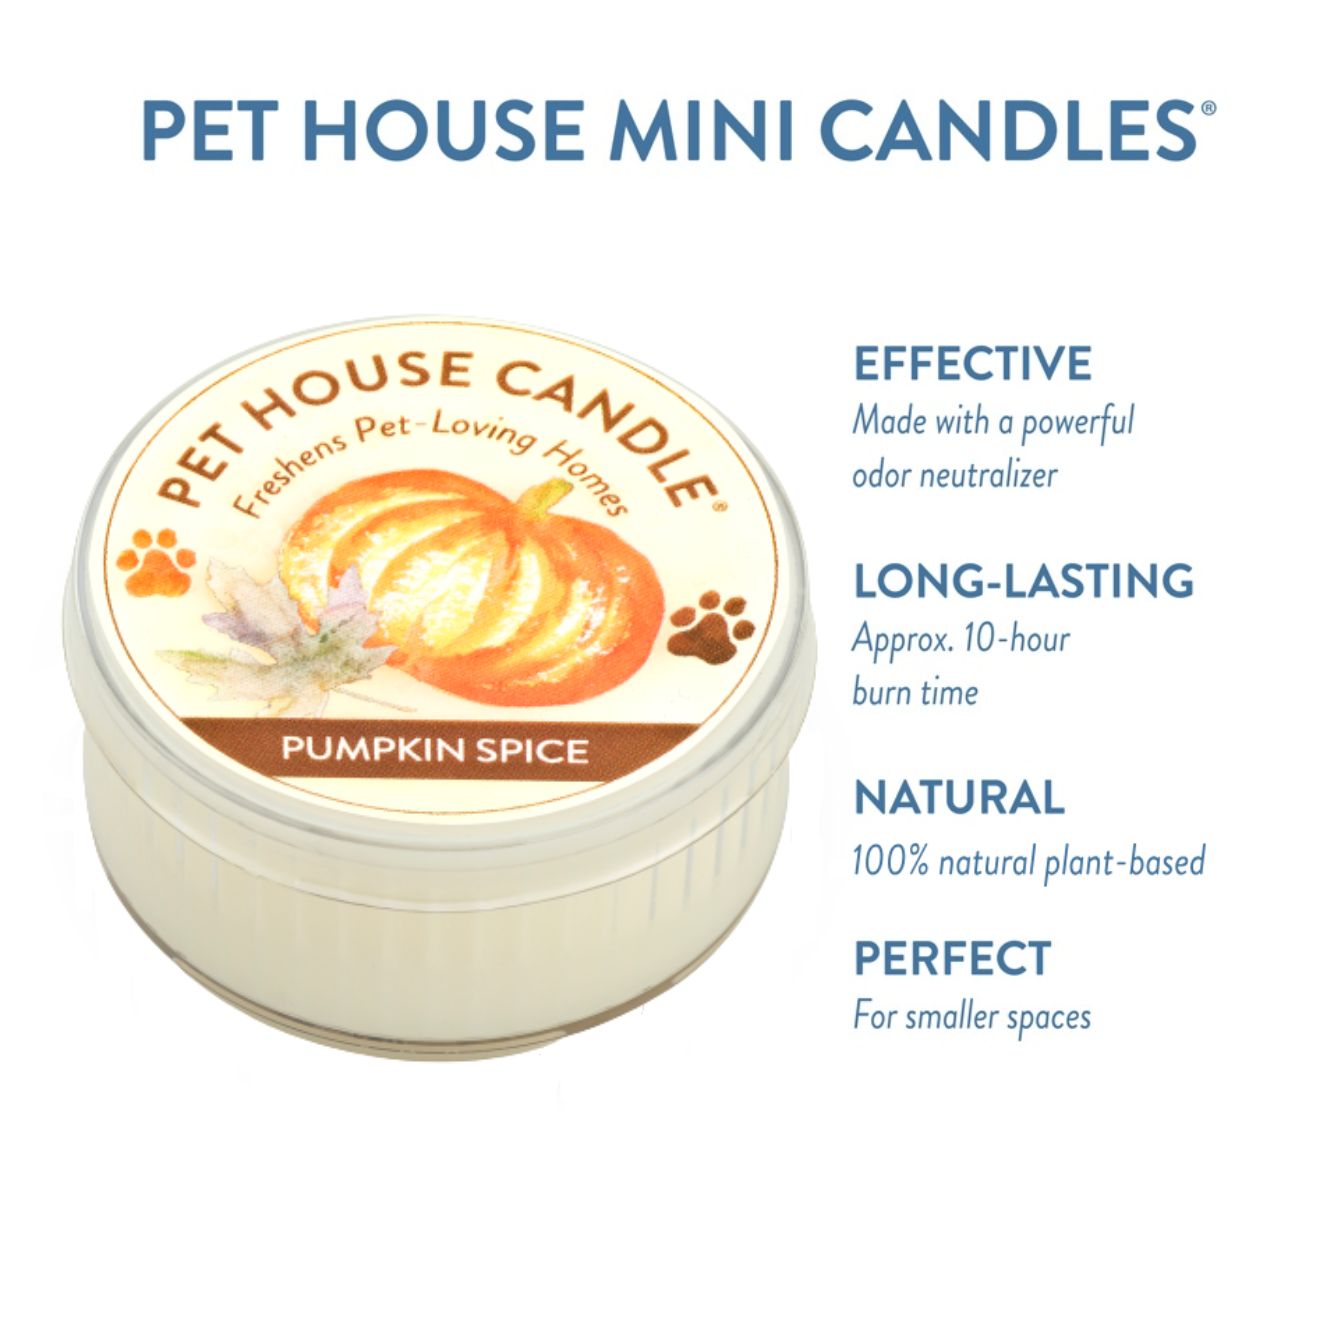 Pumpkin Spice Mini Candle infographics